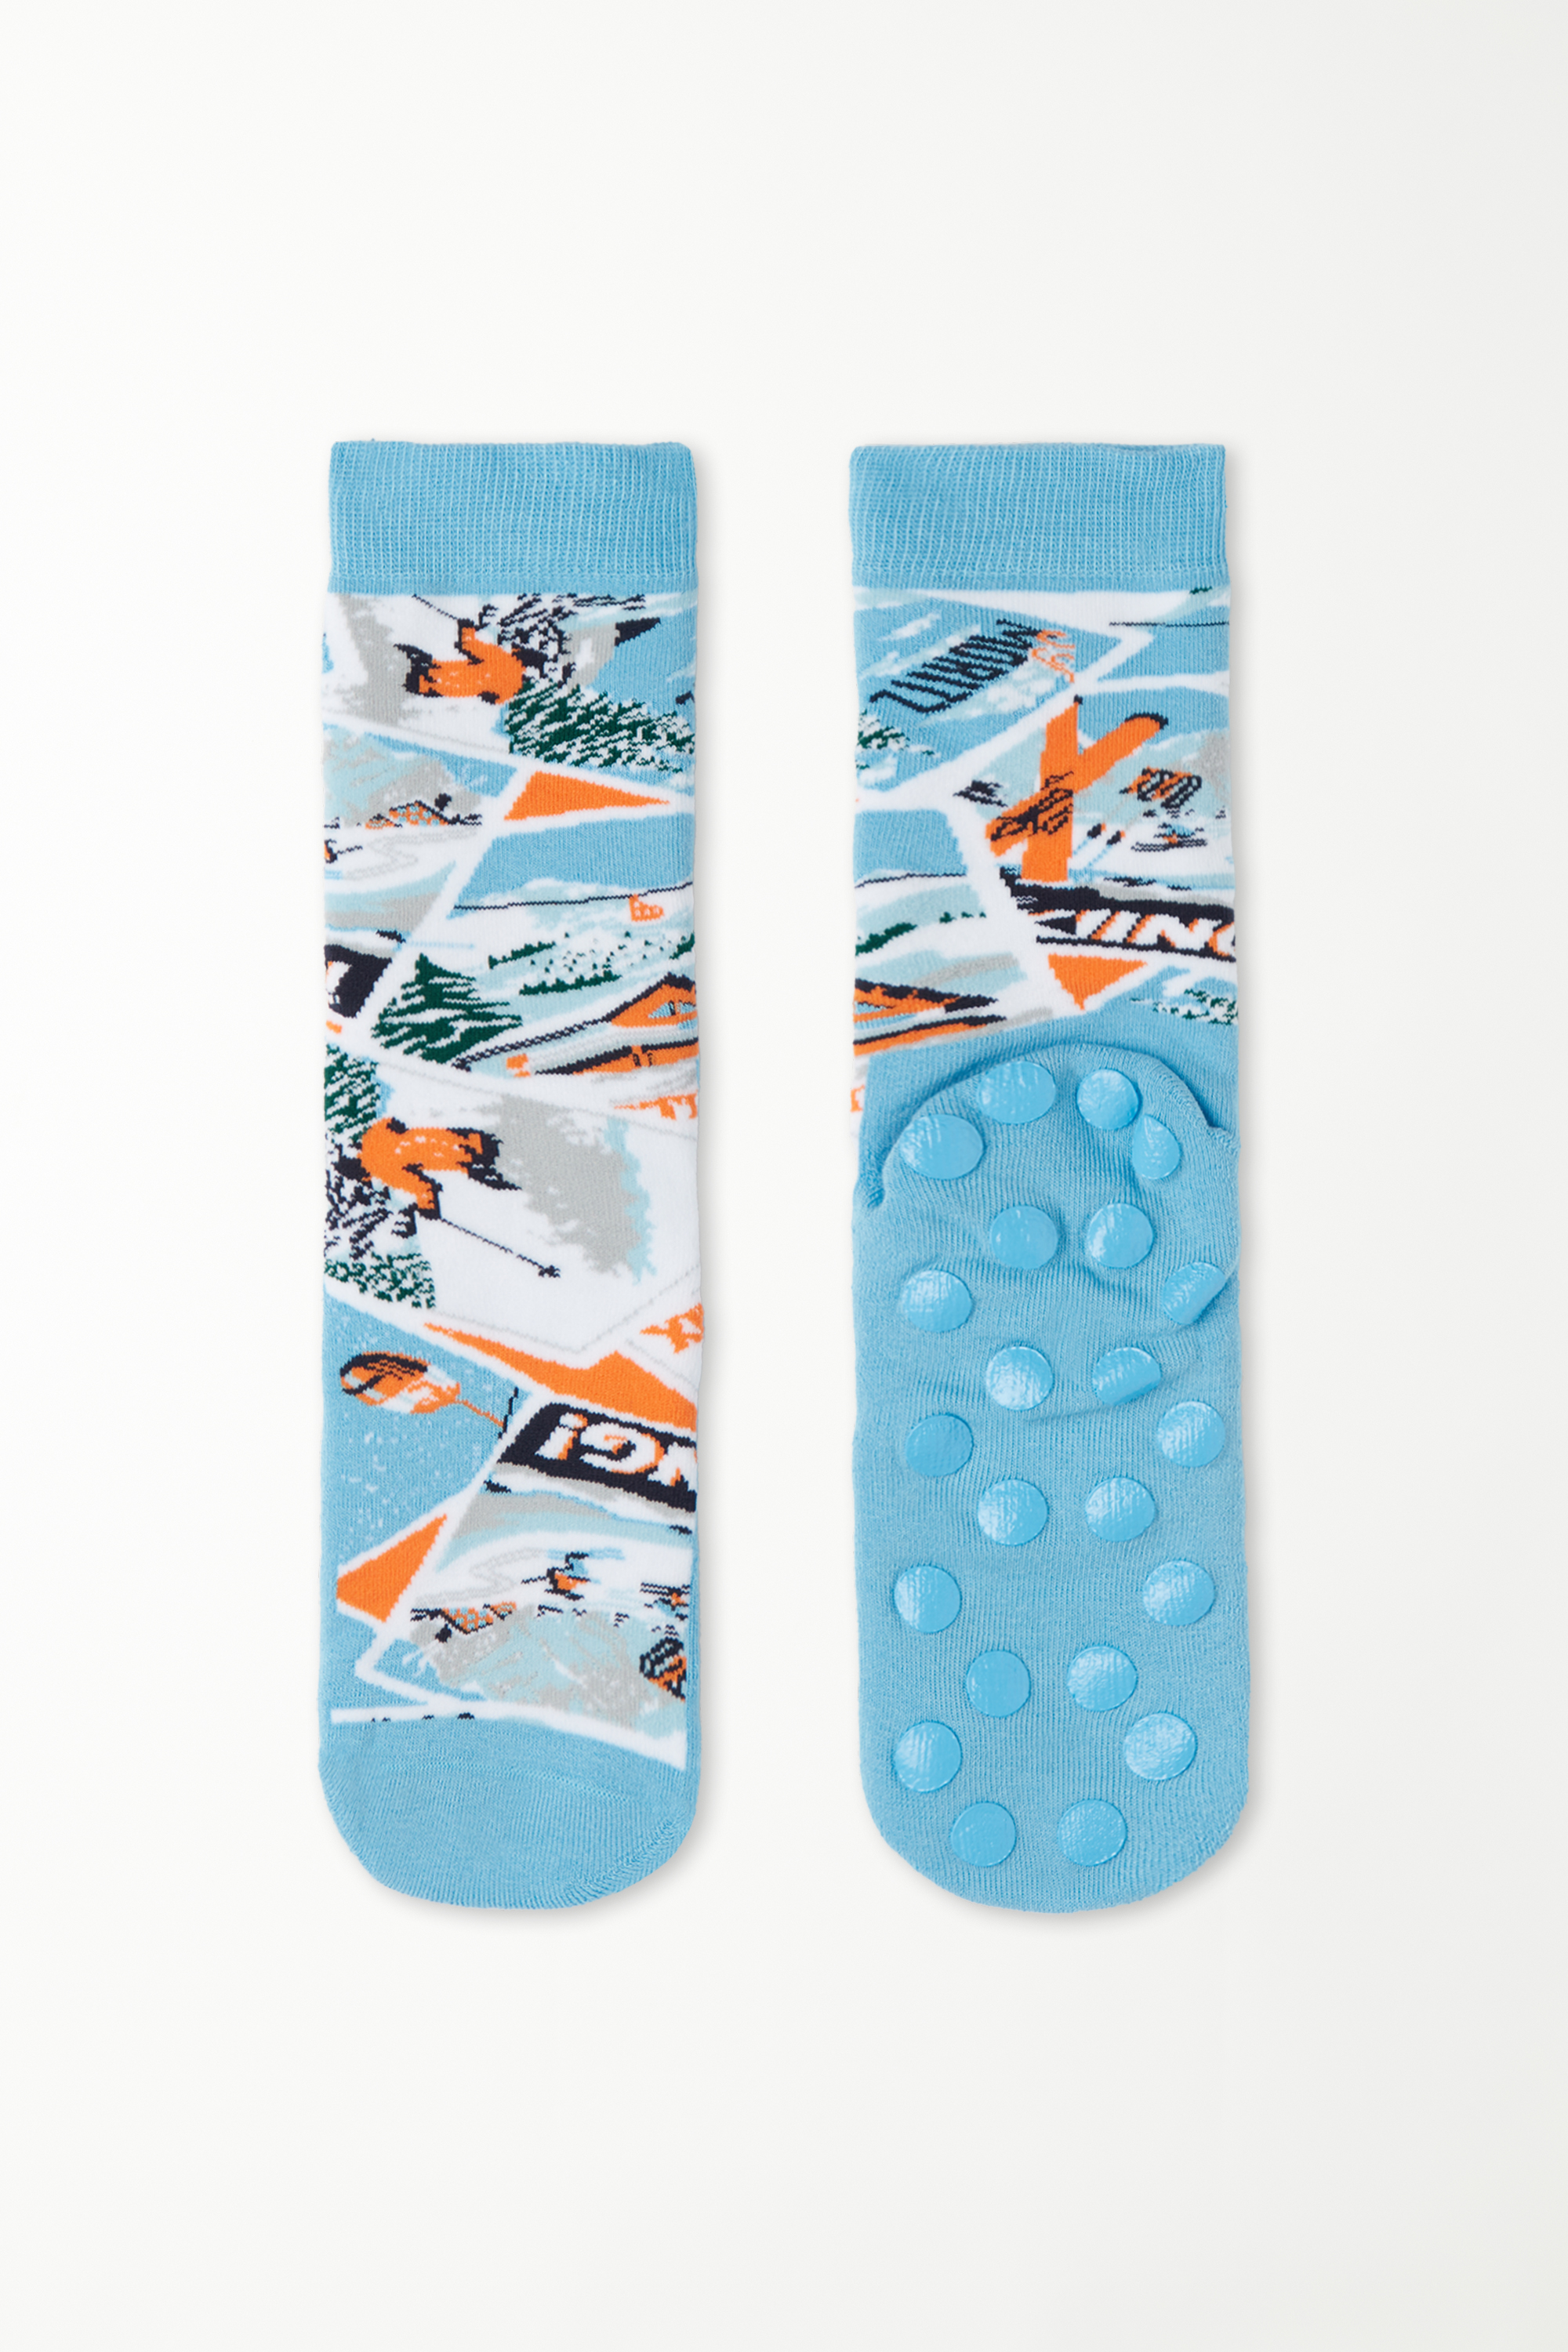 Short Non-Slip Socks with Dear Santa Christmas Print - Grip